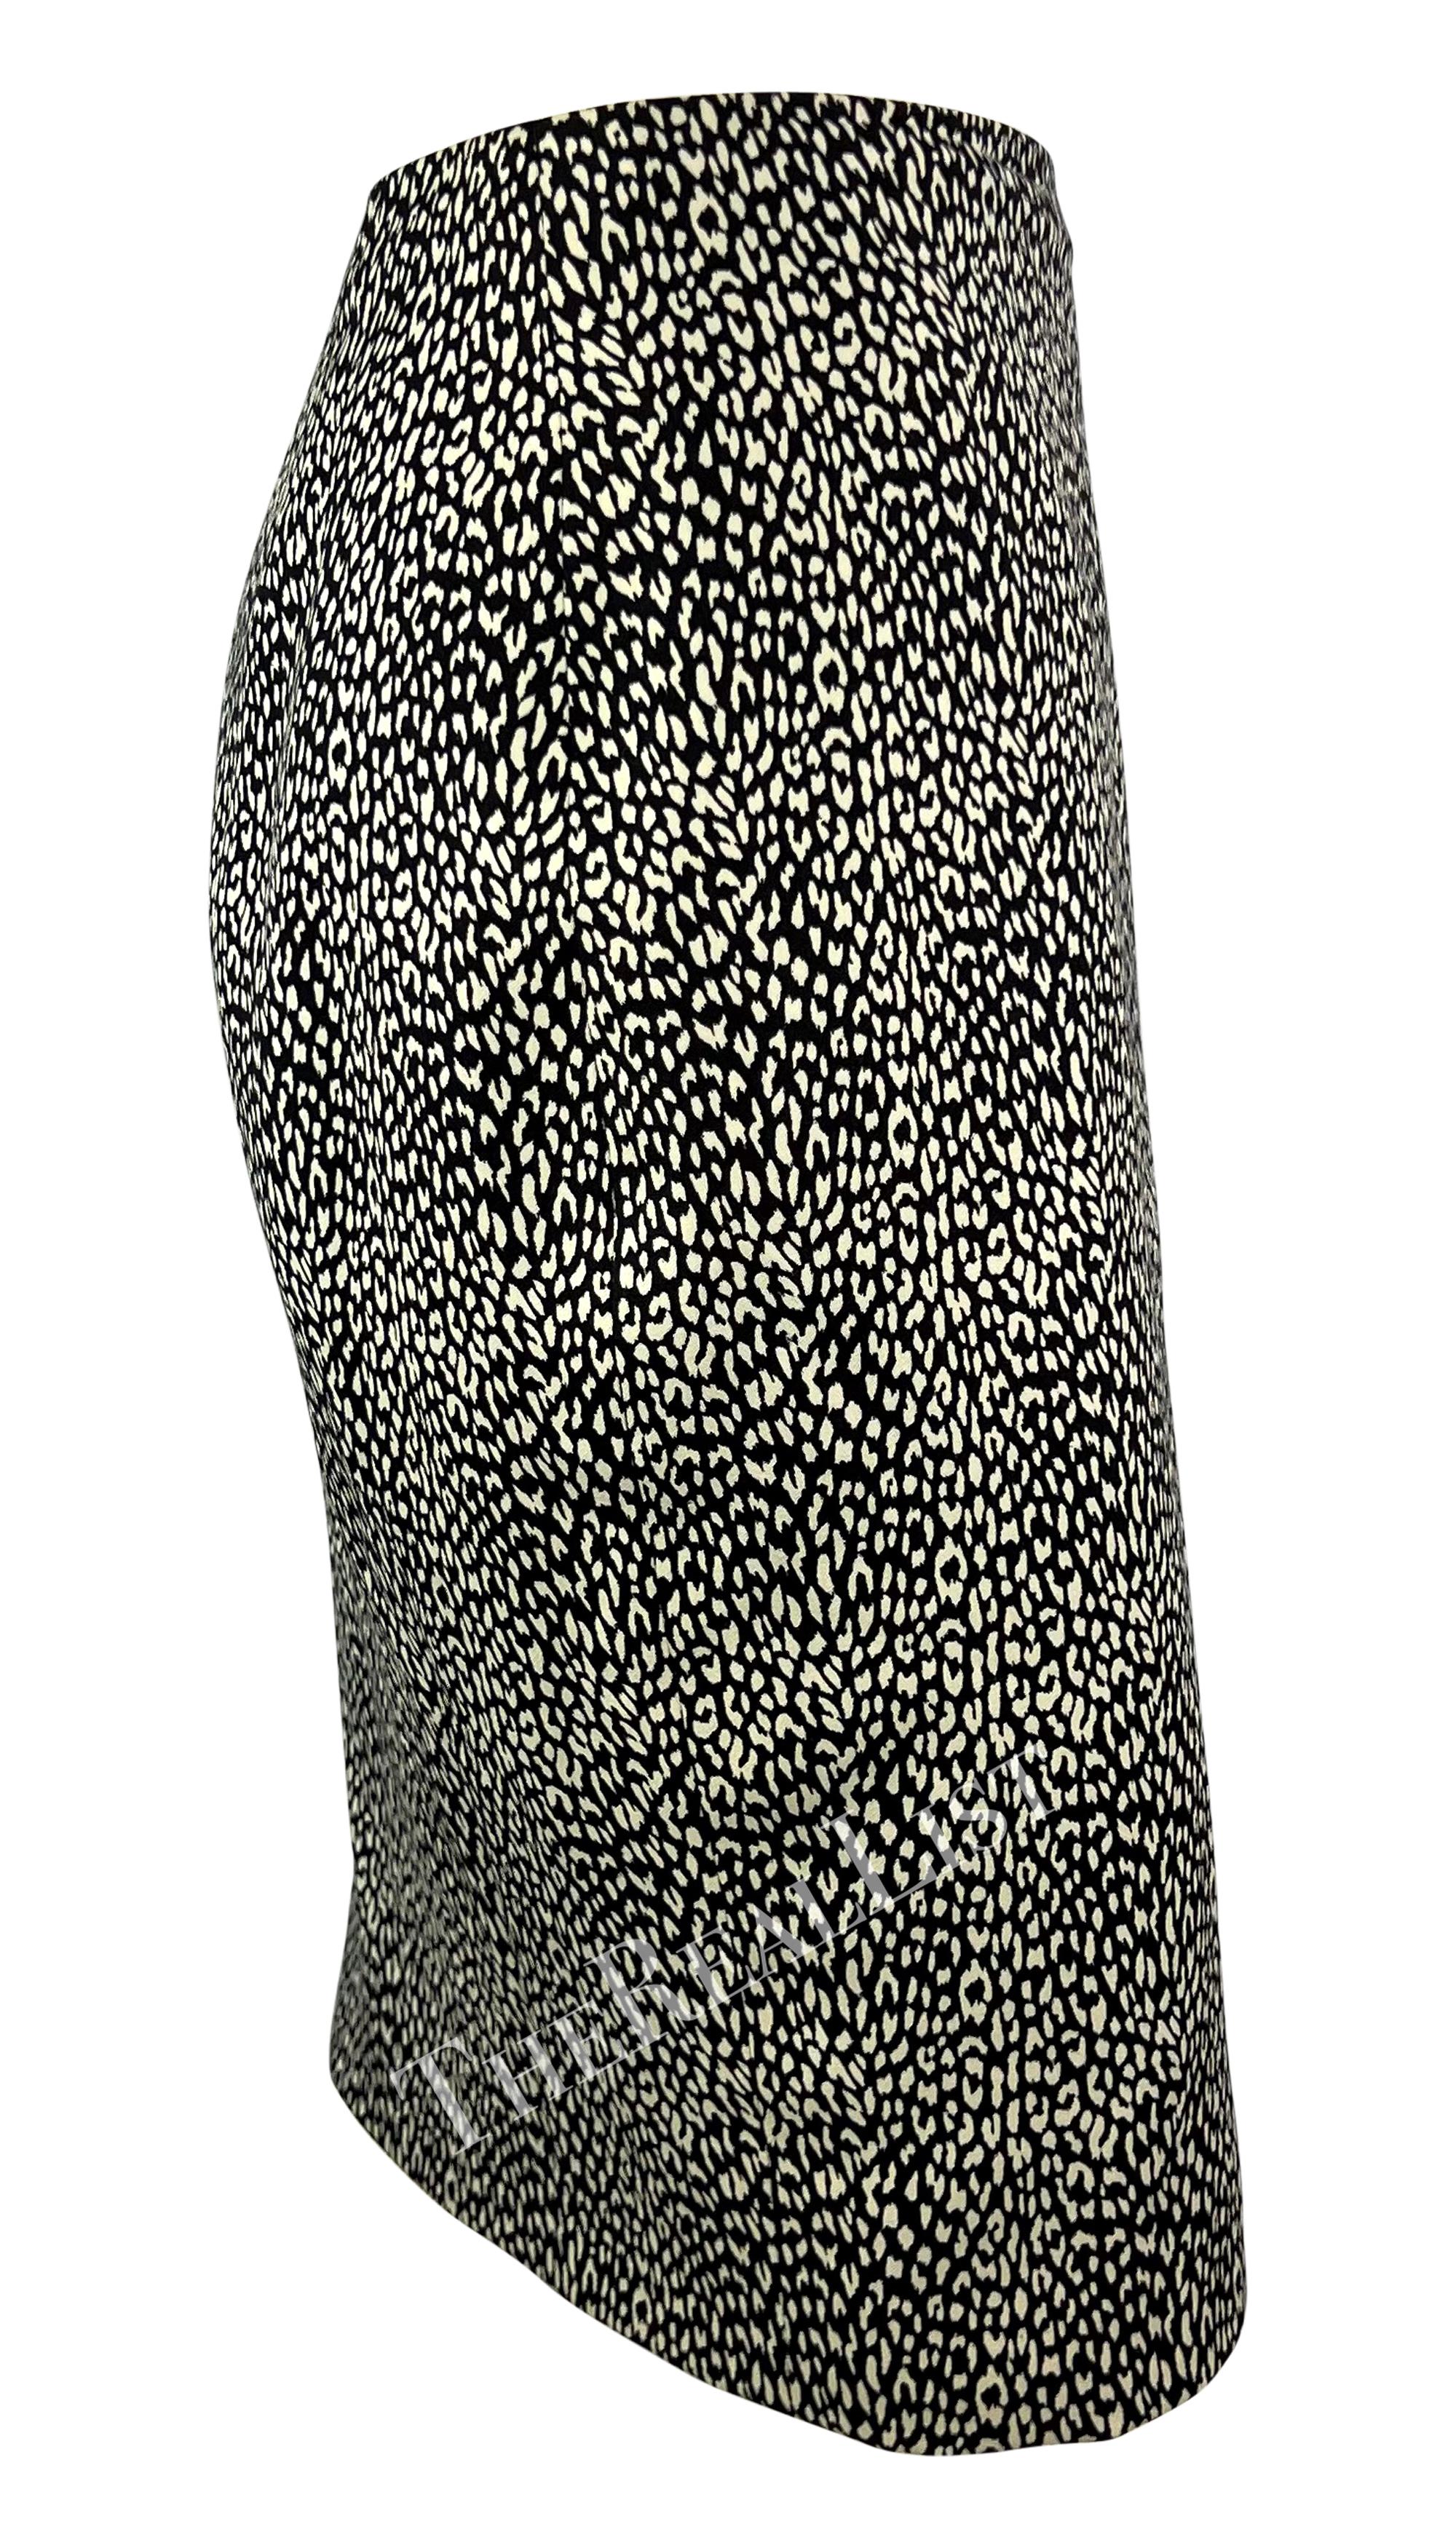 F/W 1996 Gianni Versace Couture Black White Cheetah Print Pencil Skirt  For Sale 1